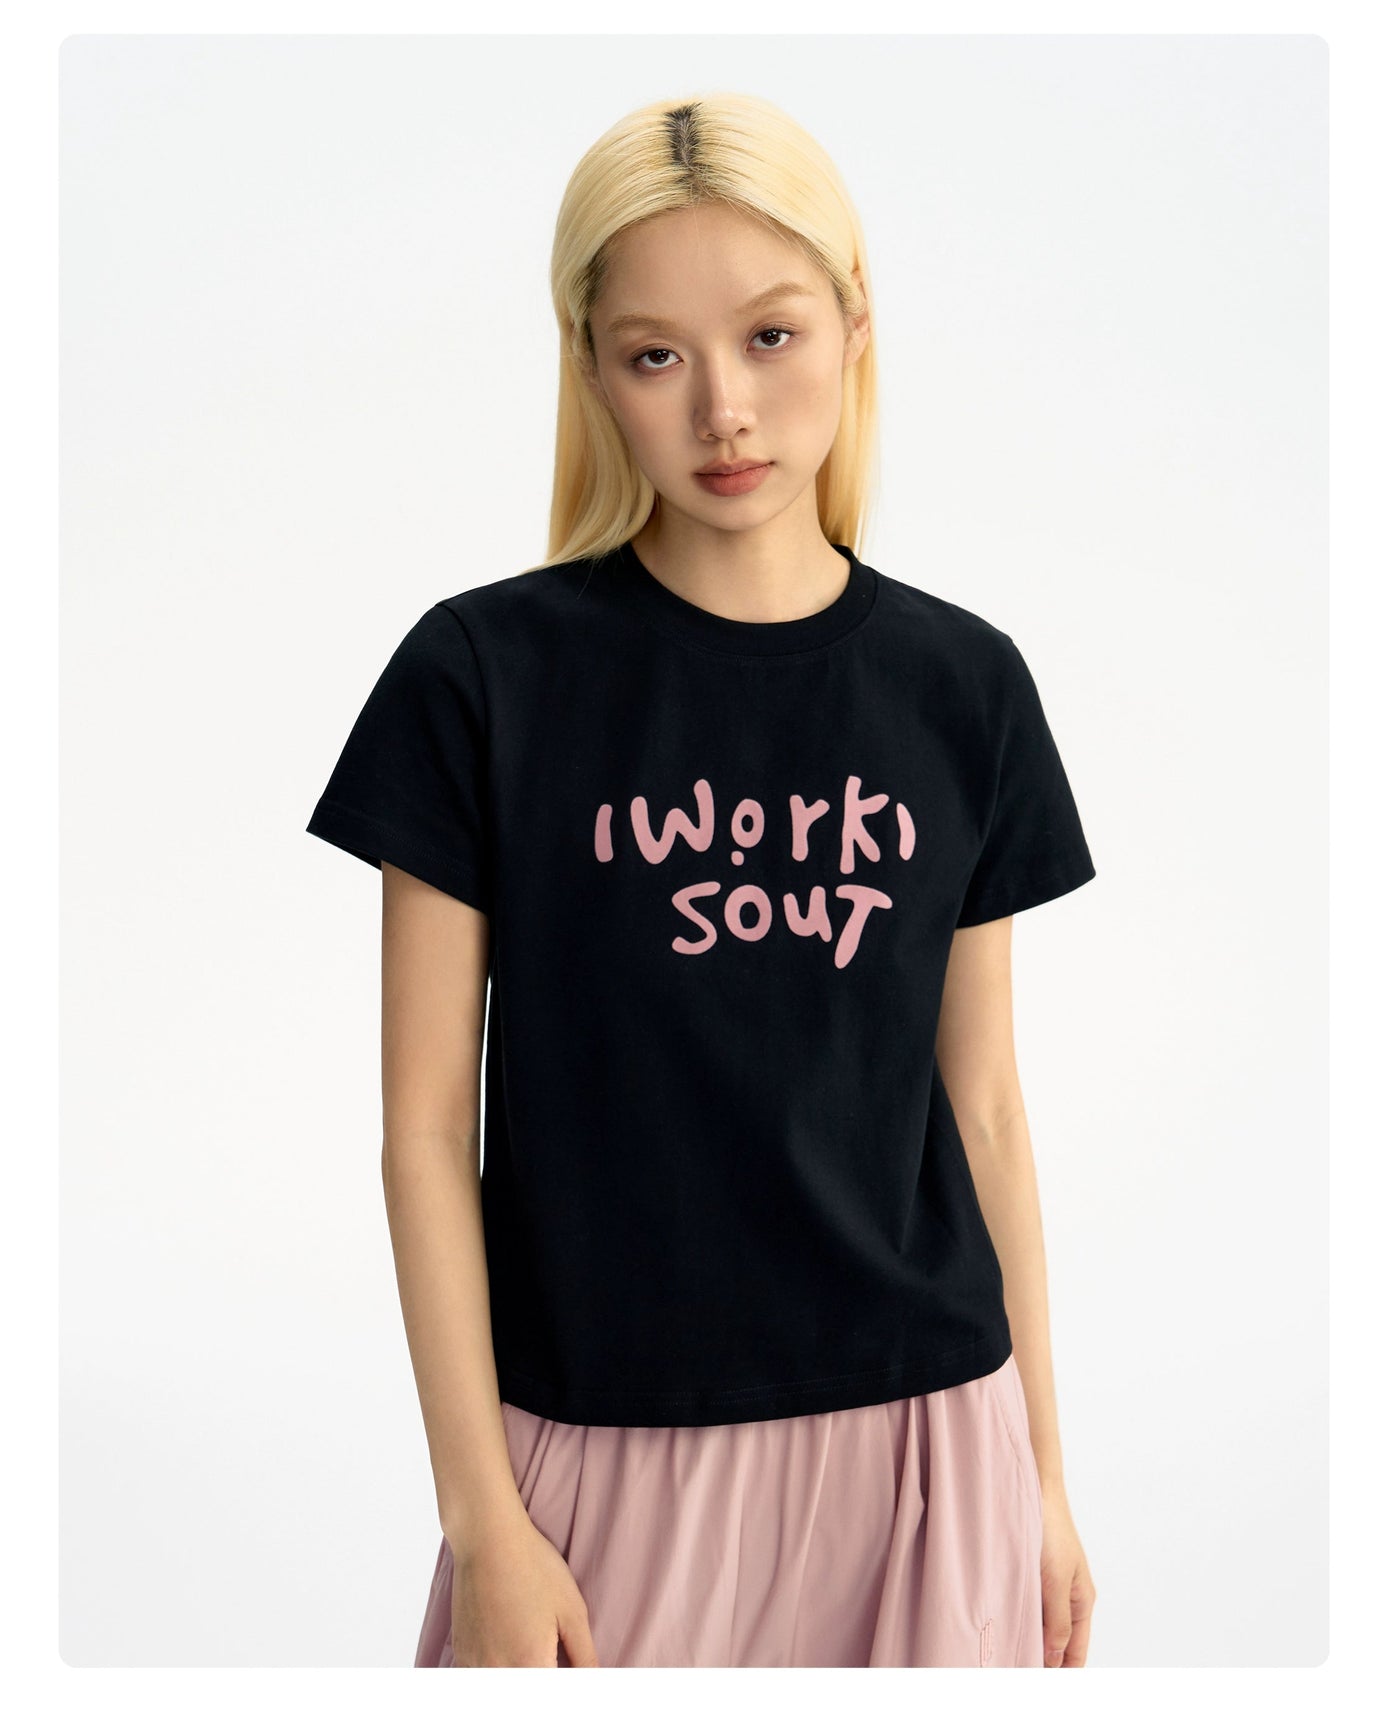 Fun Handwriting Text T-Shirt Korean Street Fashion T-Shirt By WORKSOUT Shop Online at OH Vault